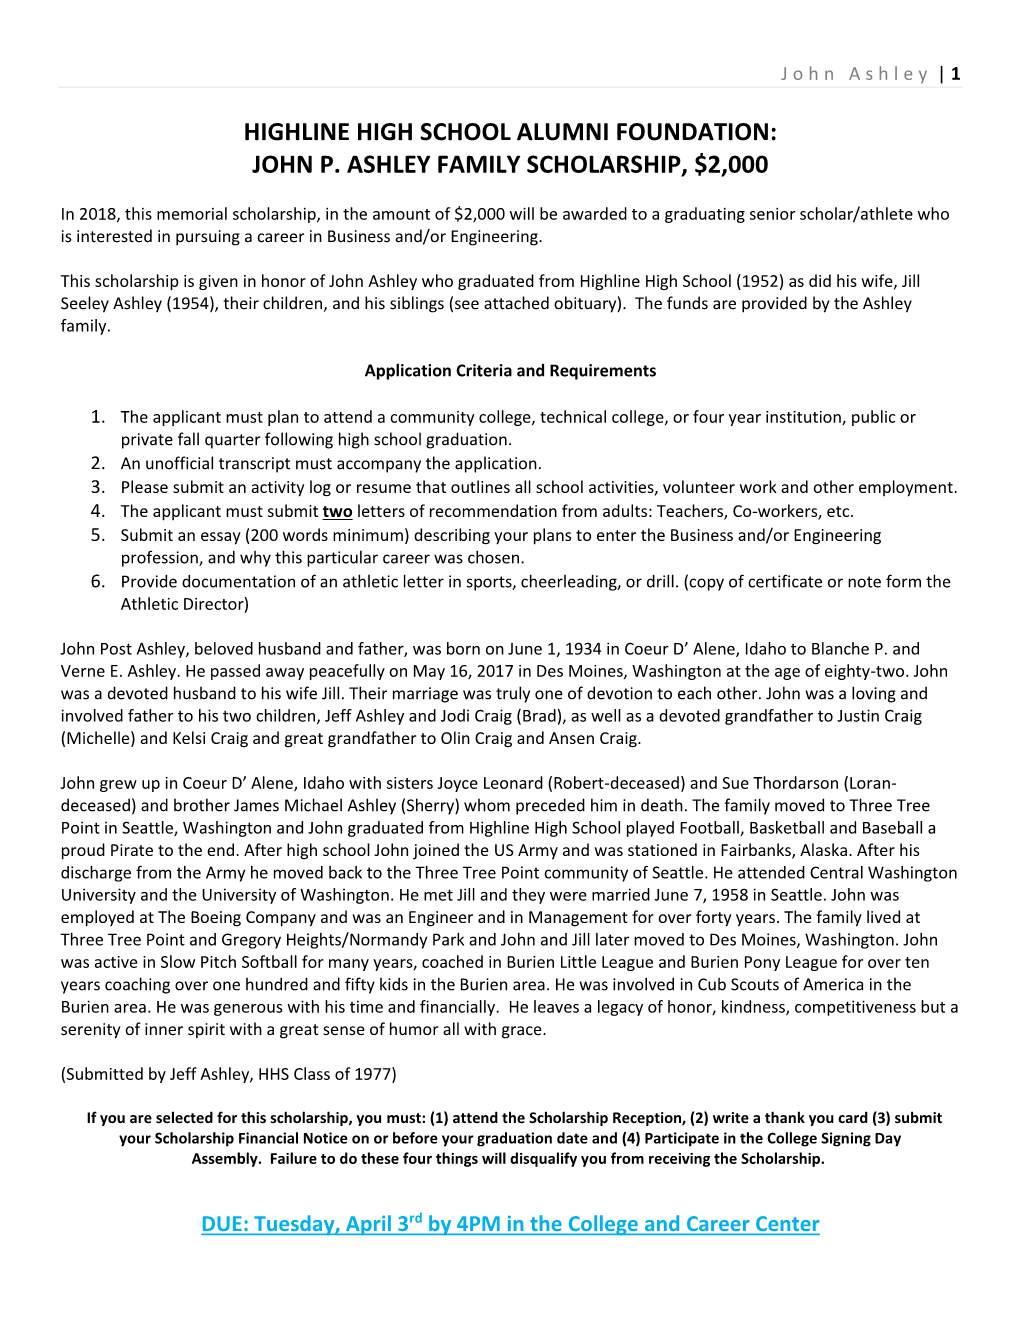 Highline High School Alumni Foundation: John P. Ashley Family Scholarship, $2,000